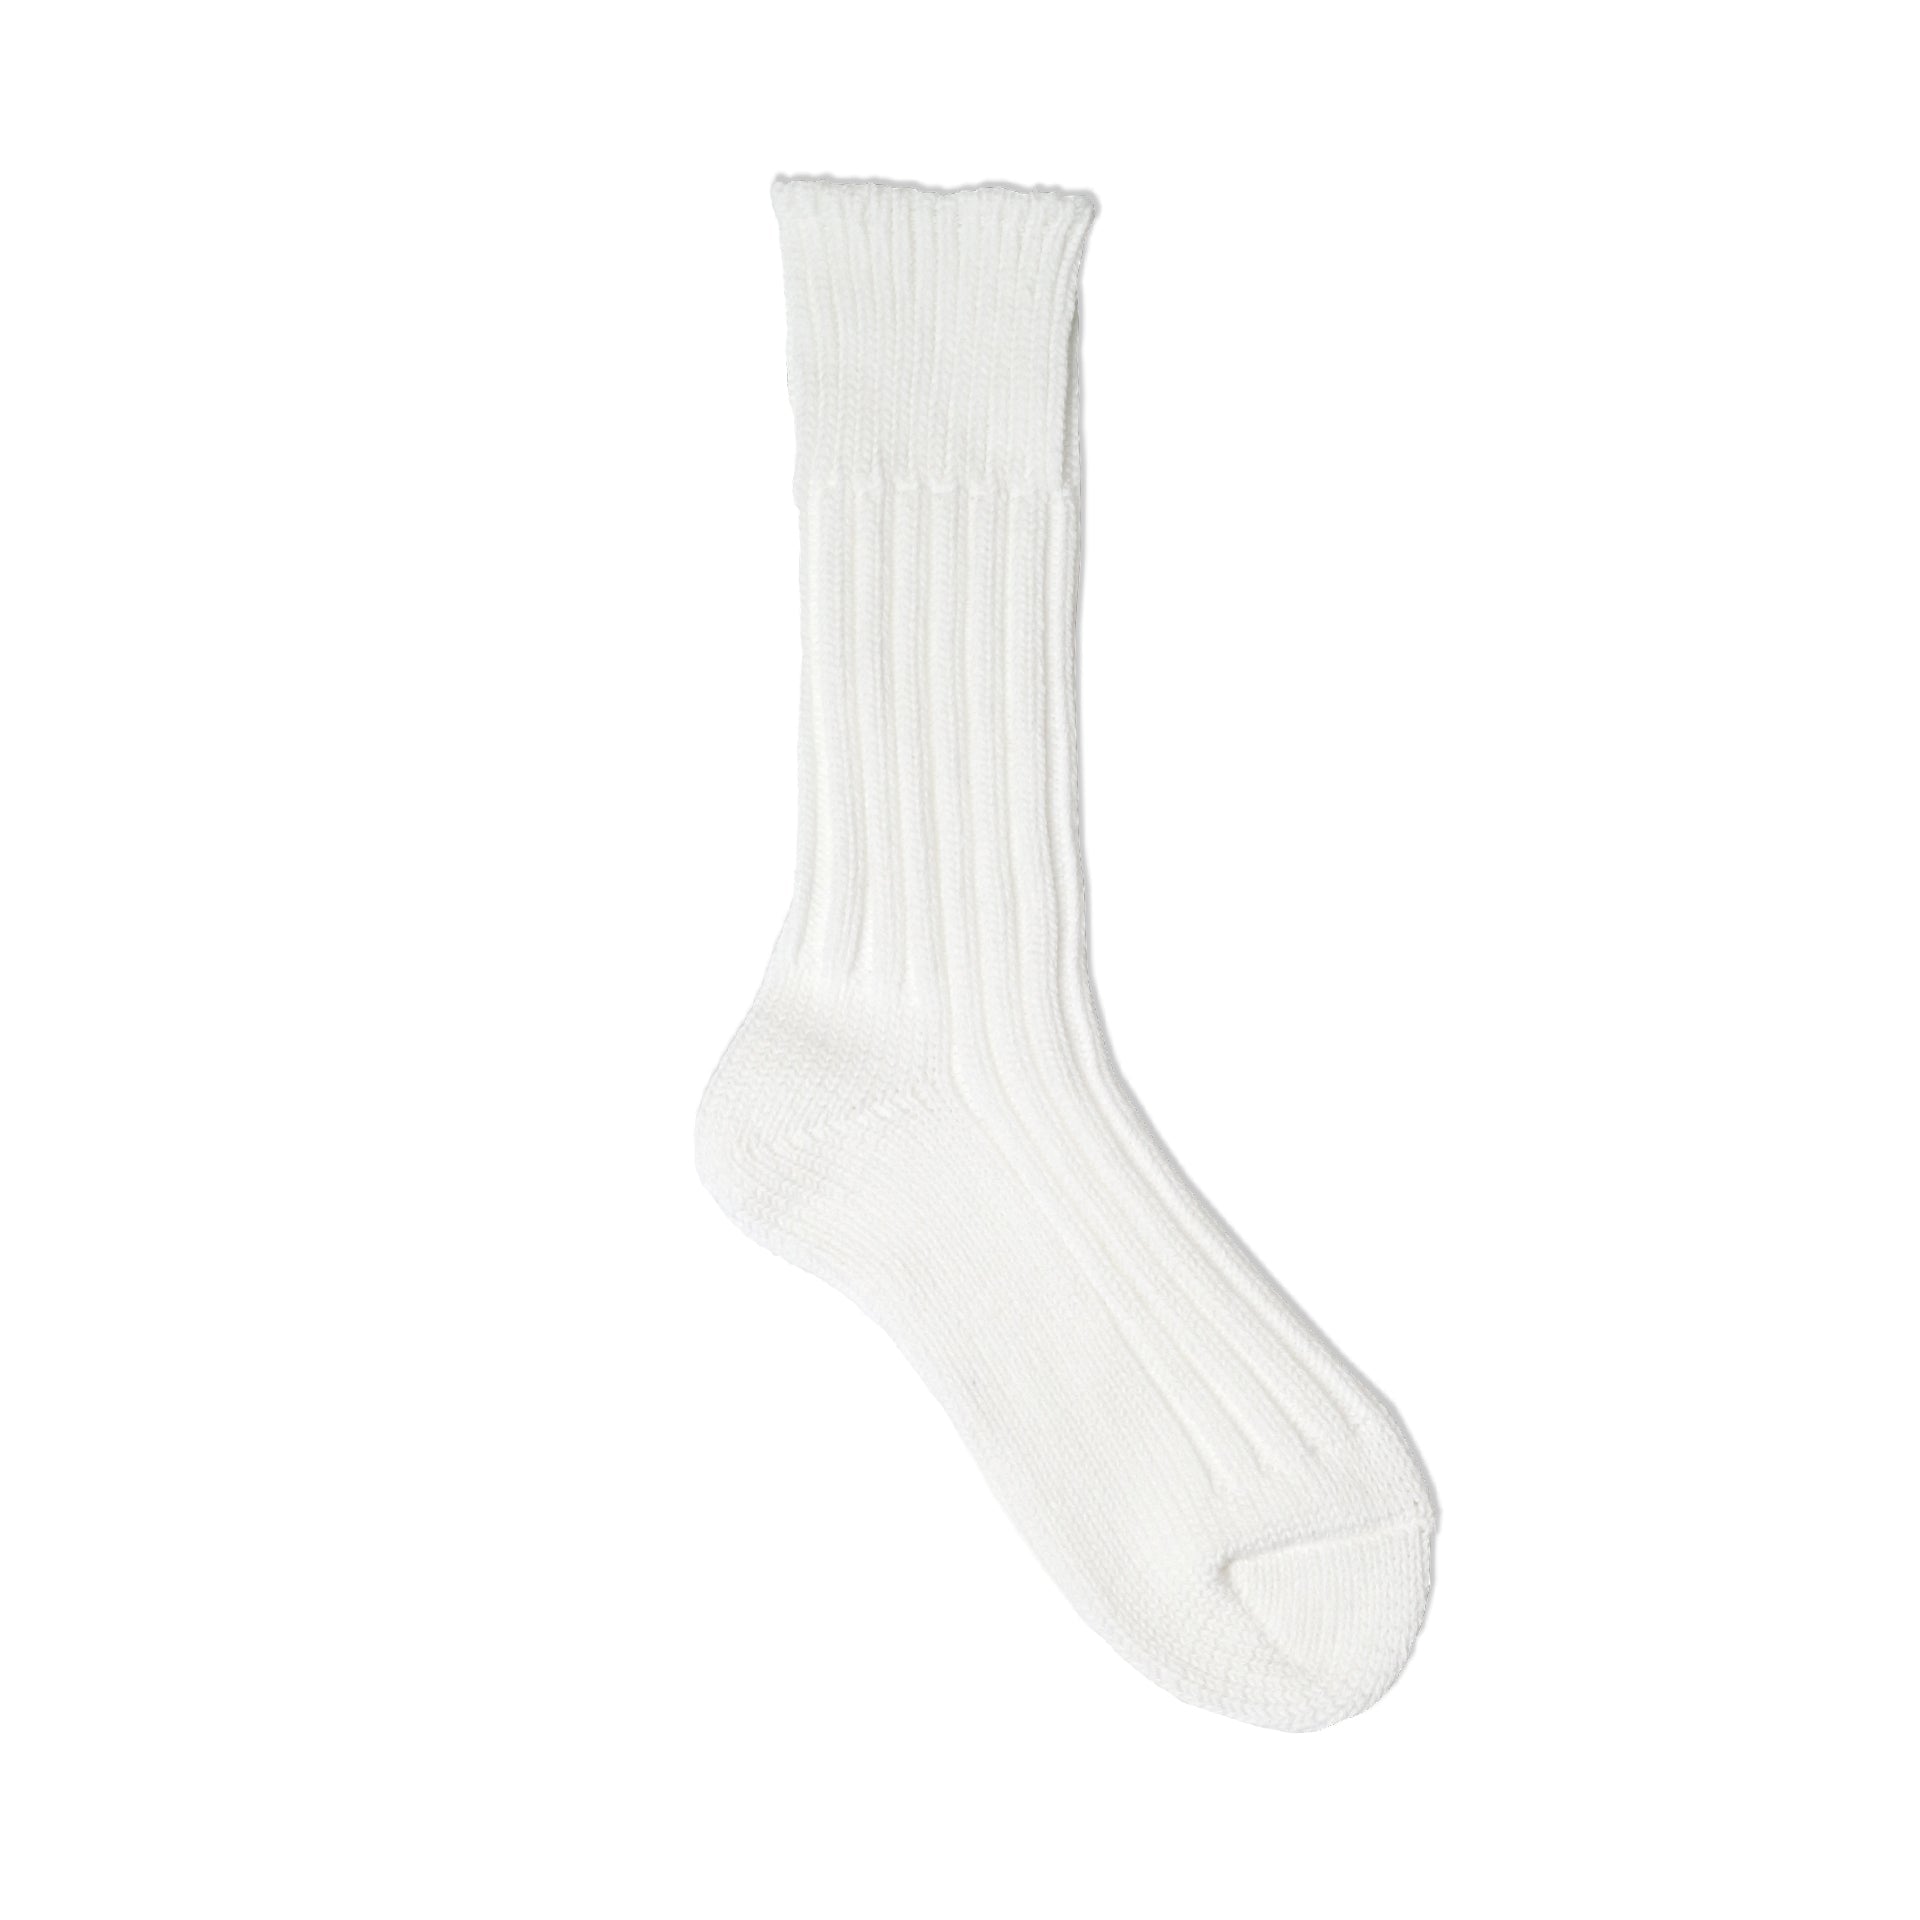 decka decka cased heavyweight socks (white)